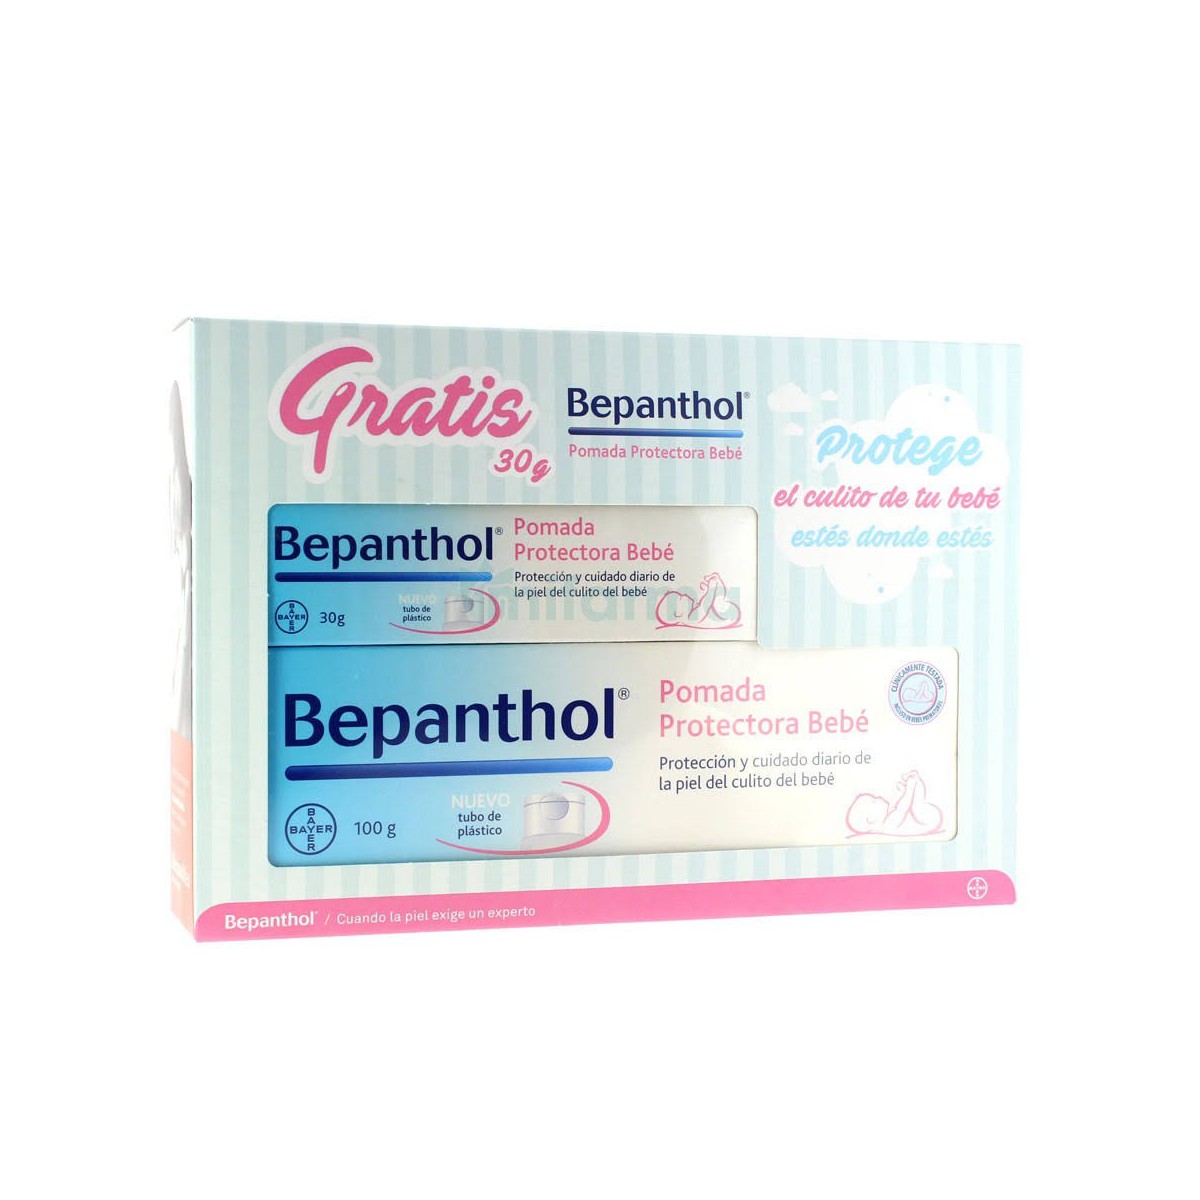 bepanthol pack pomada protectora bebe 100 gramos 30 gramos